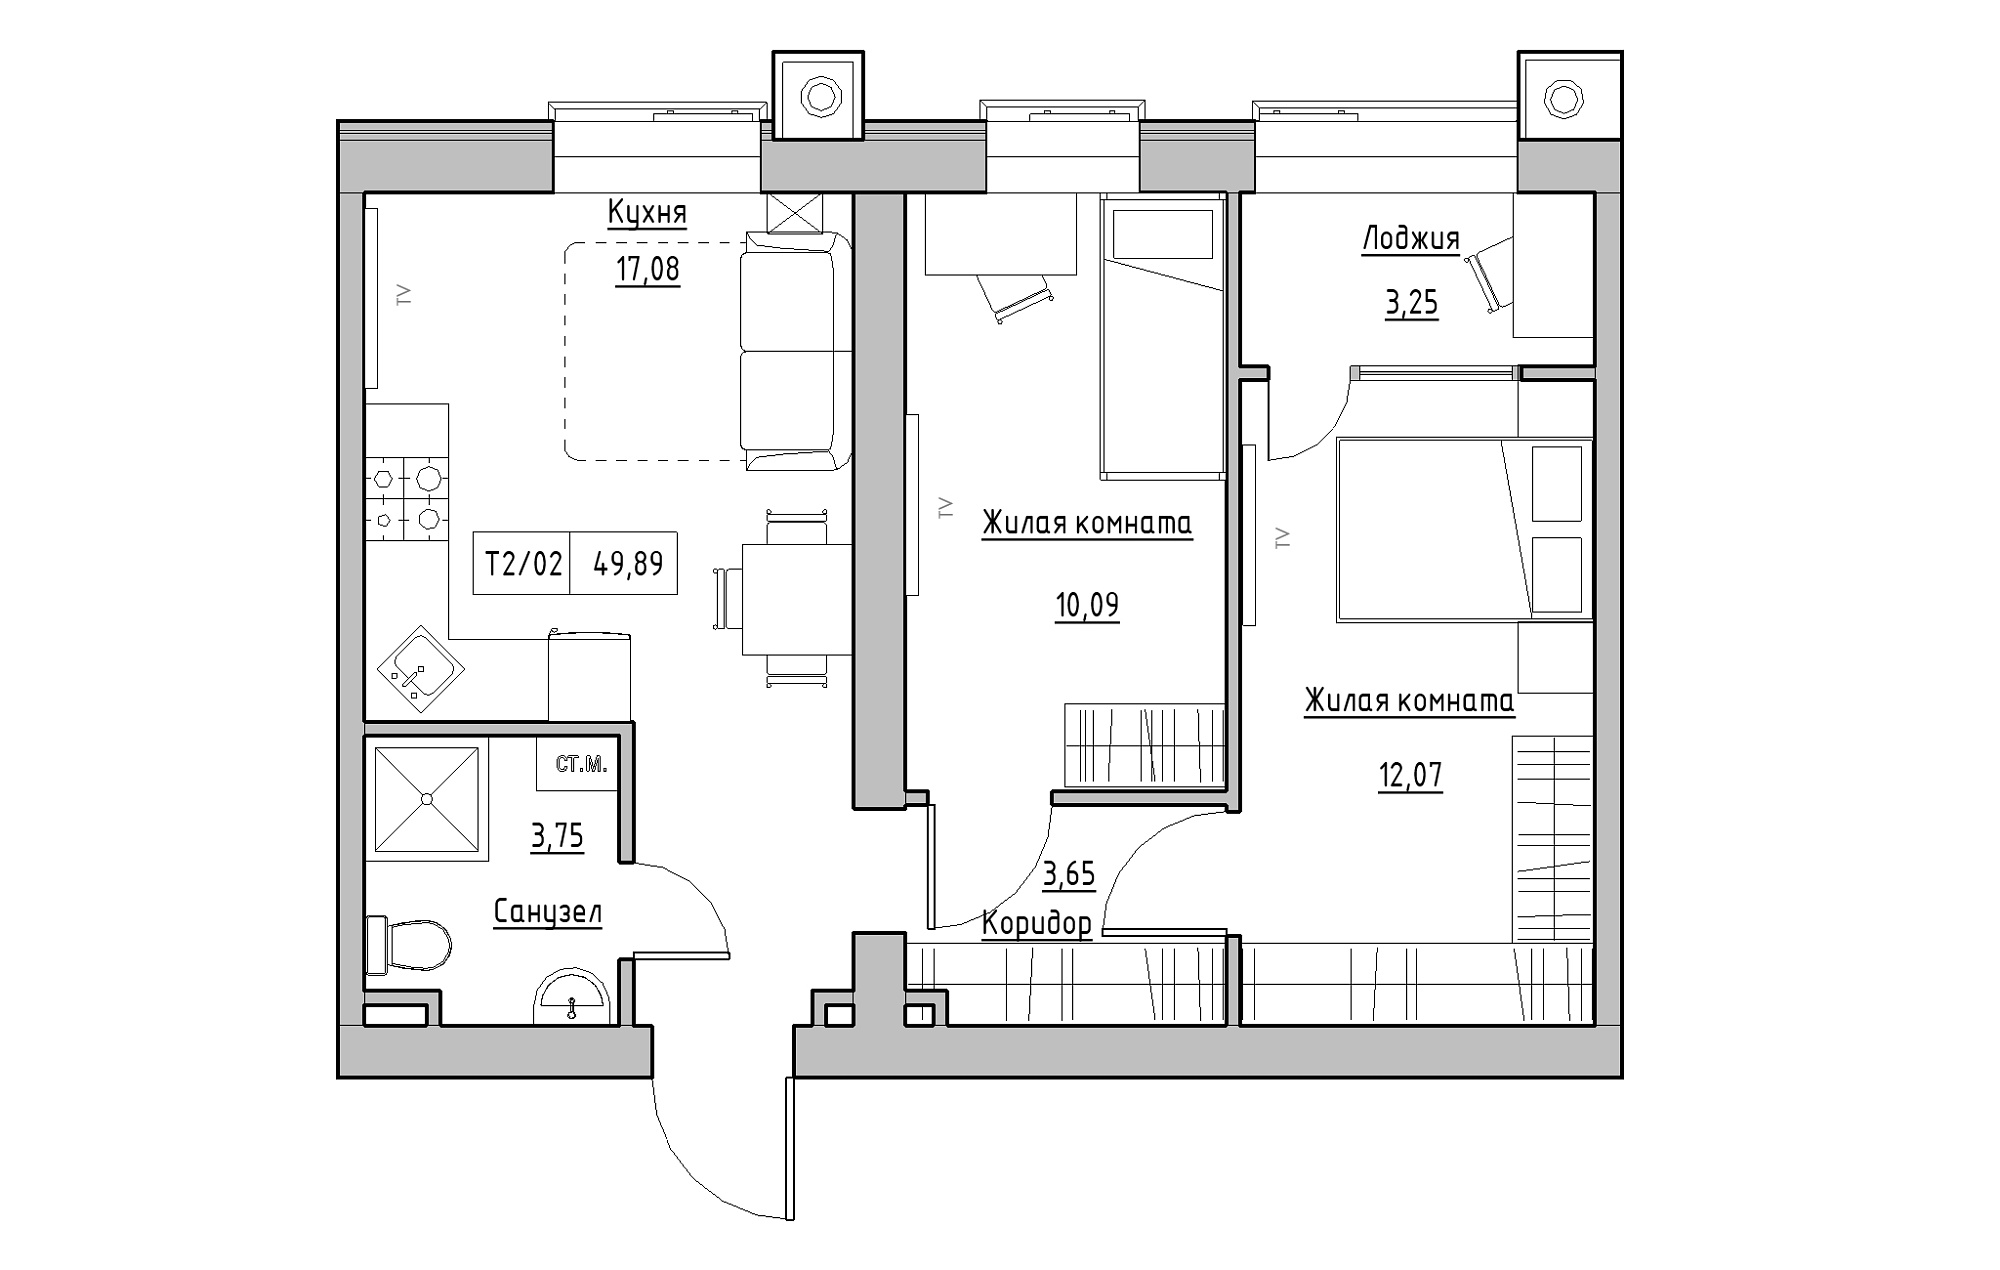 Planning 2-rm flats area 49.89m2, KS-013-01/0007.